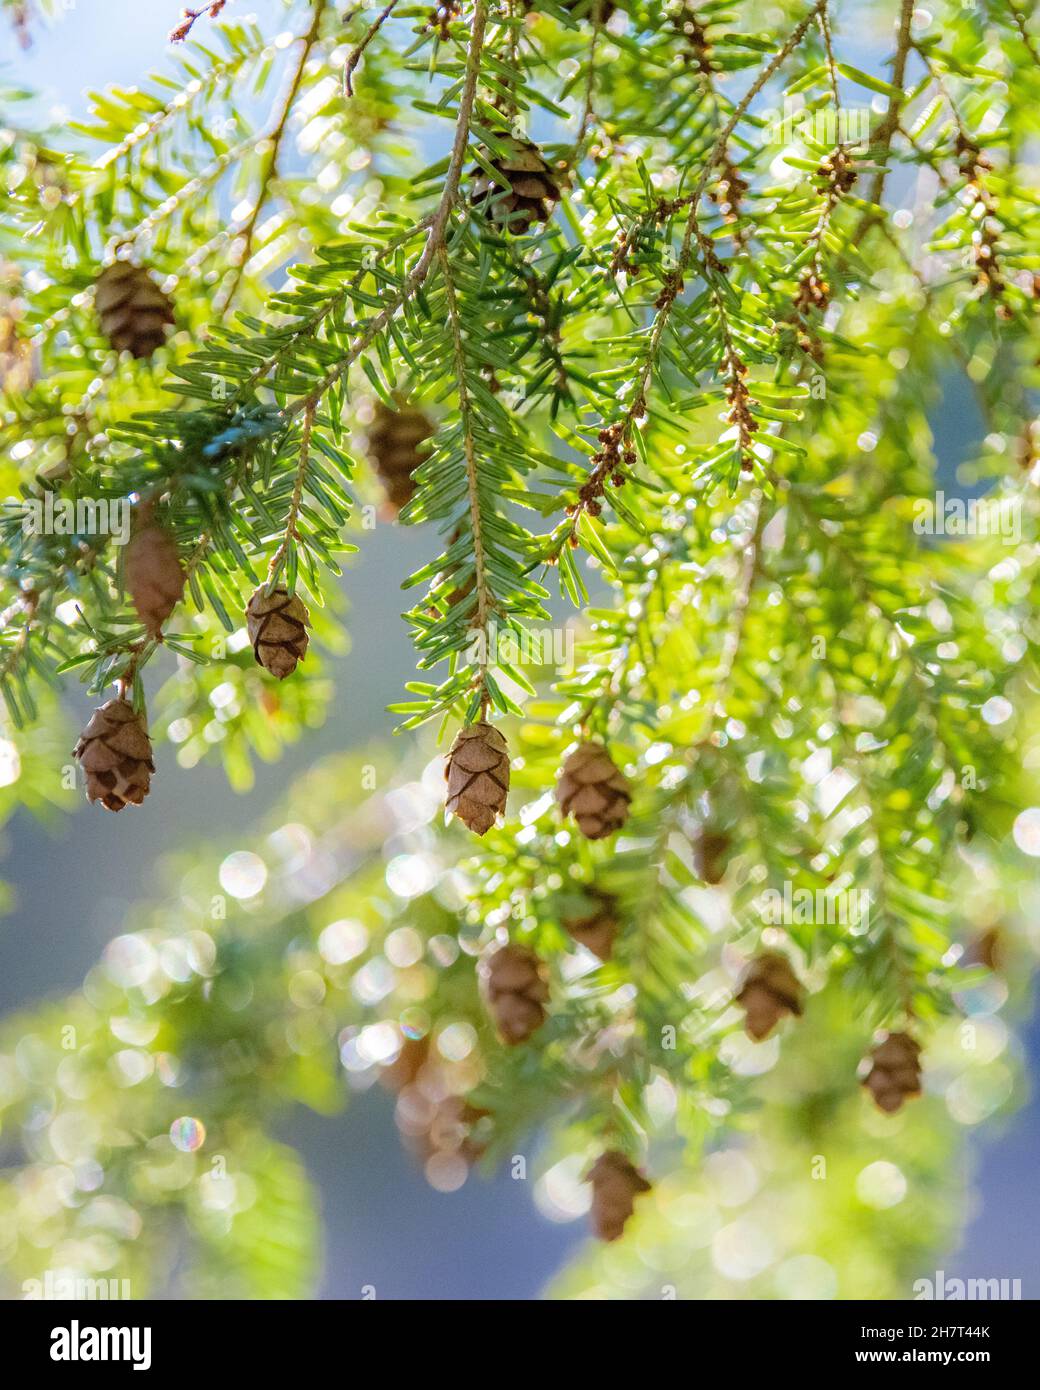 Pruche de l'est - pruche du Canada - Tsuga ou Tsuga canadensis - conifères de pins Adirondack avec cônes de pins dans le parc national Adirondack Banque D'Images